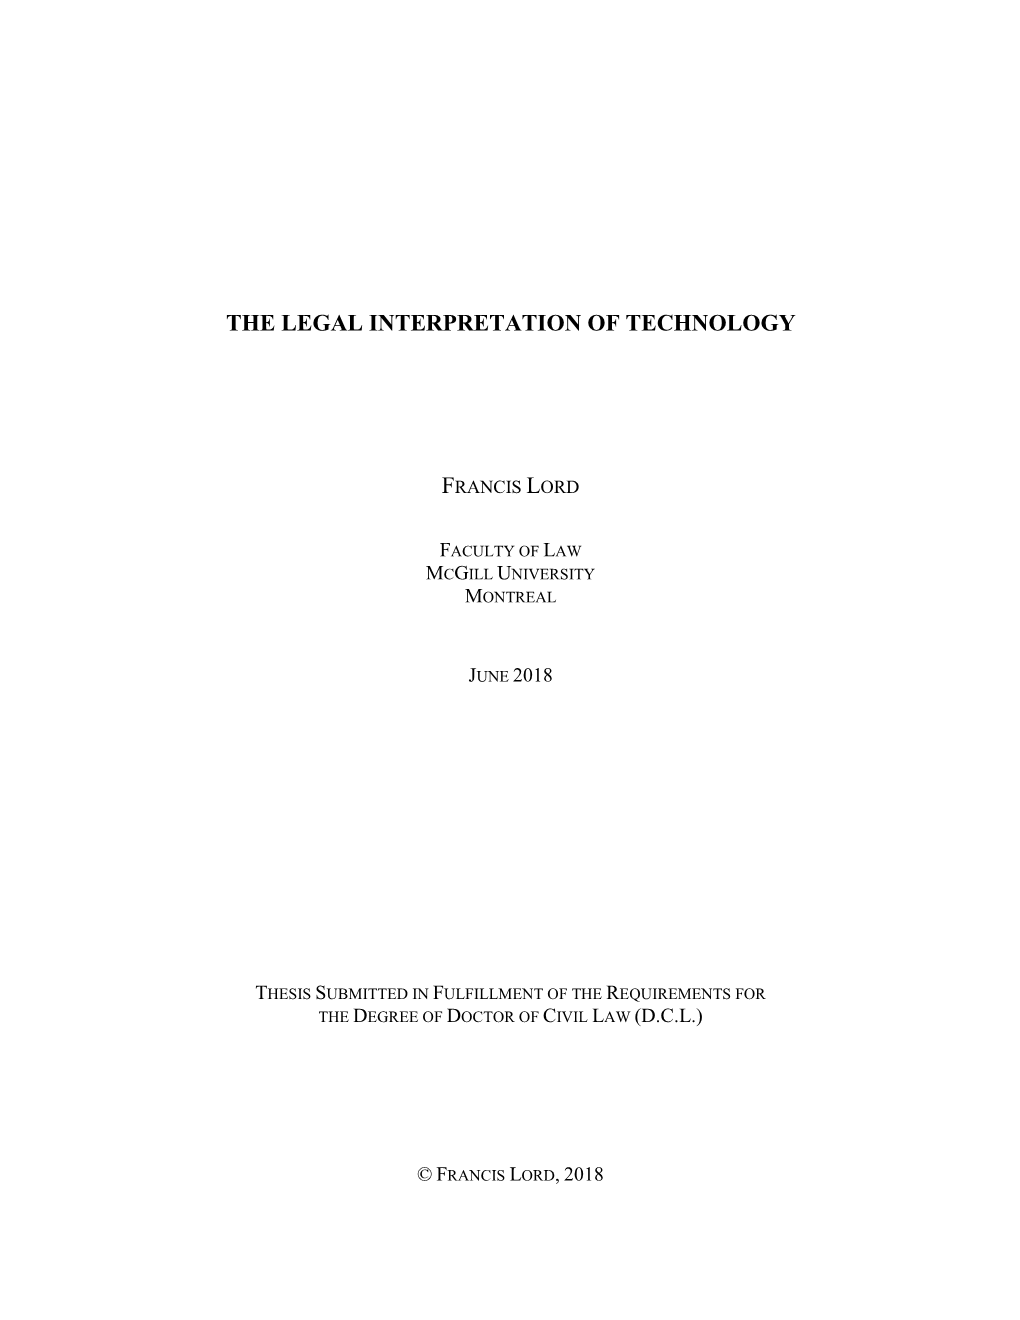 The Legal Interpretation of Technology